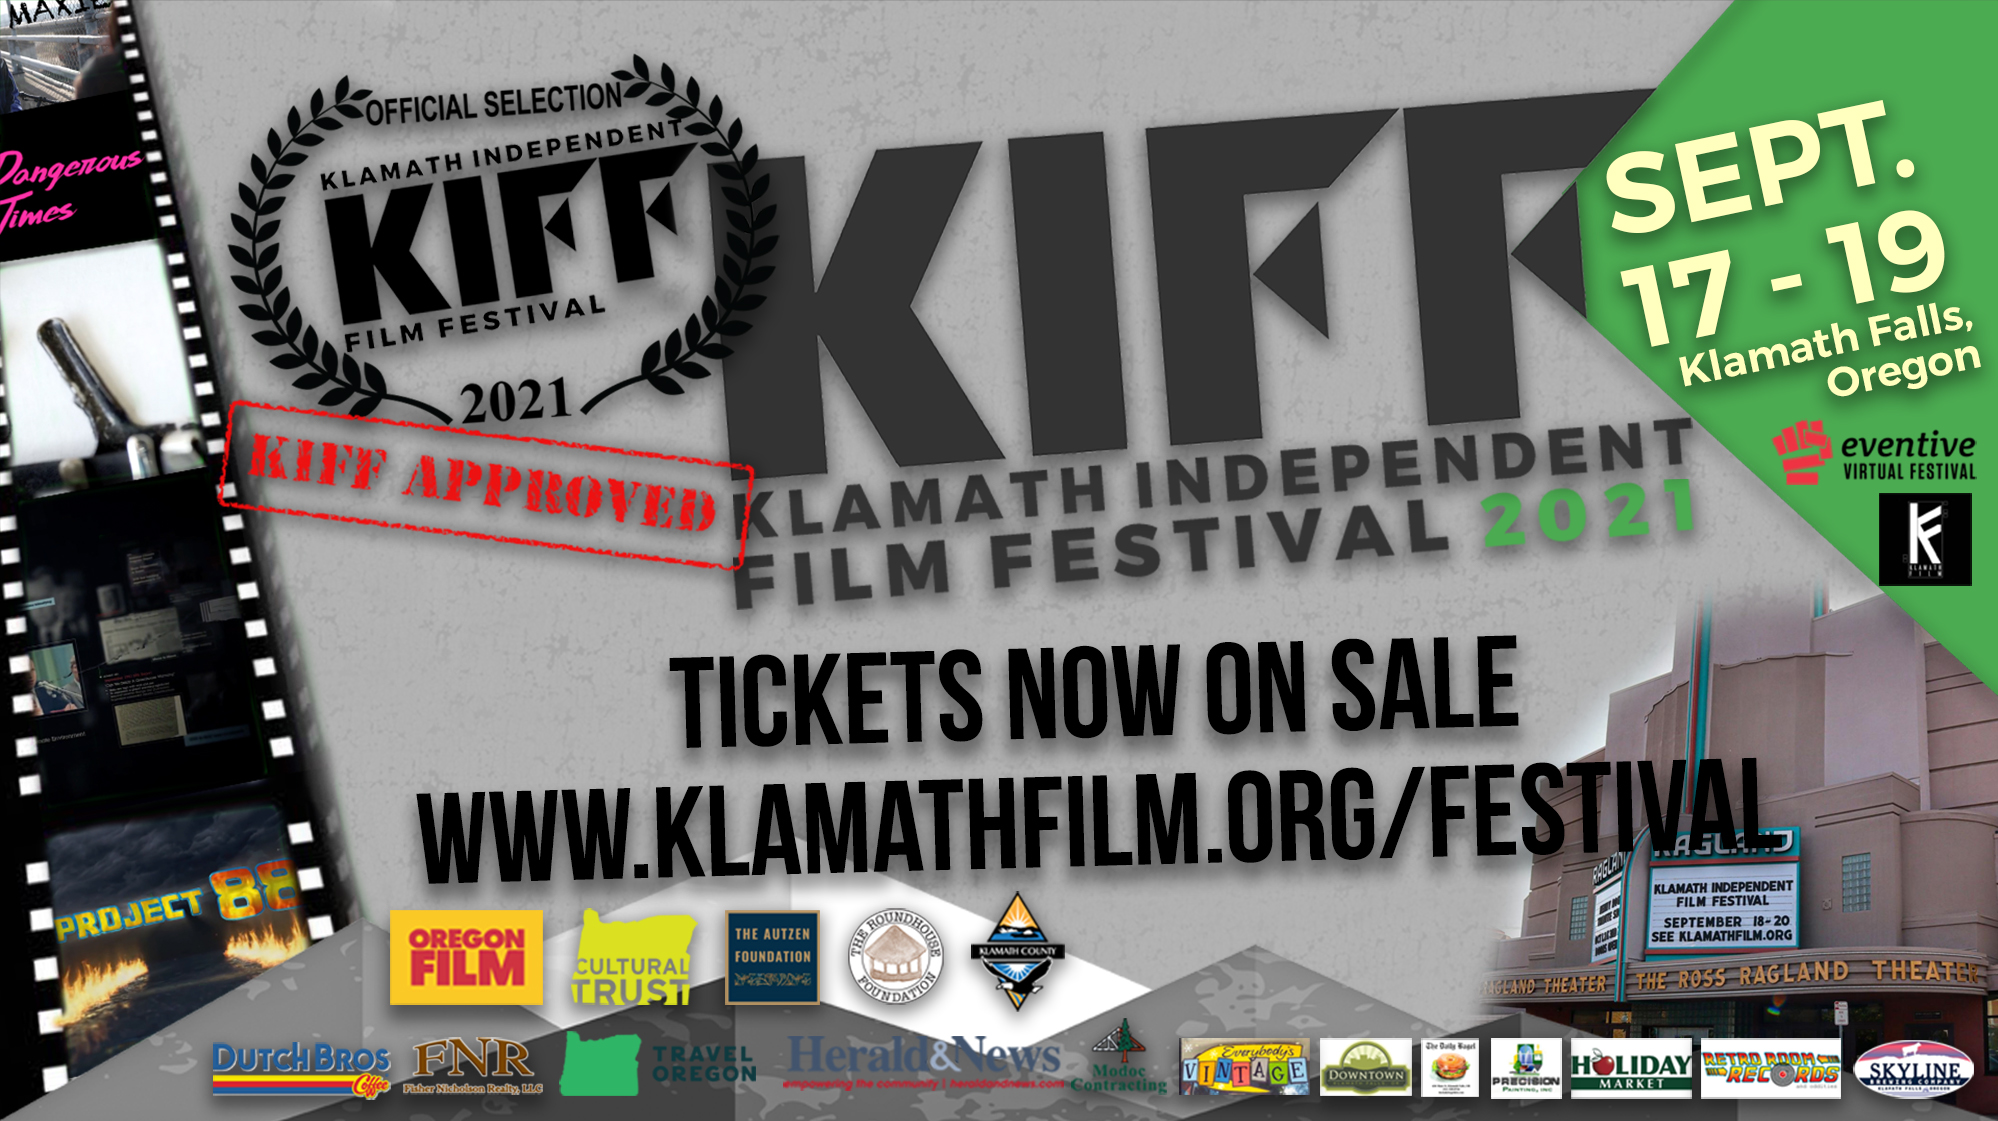 Klamath Independent Film Festival tickets now on sale